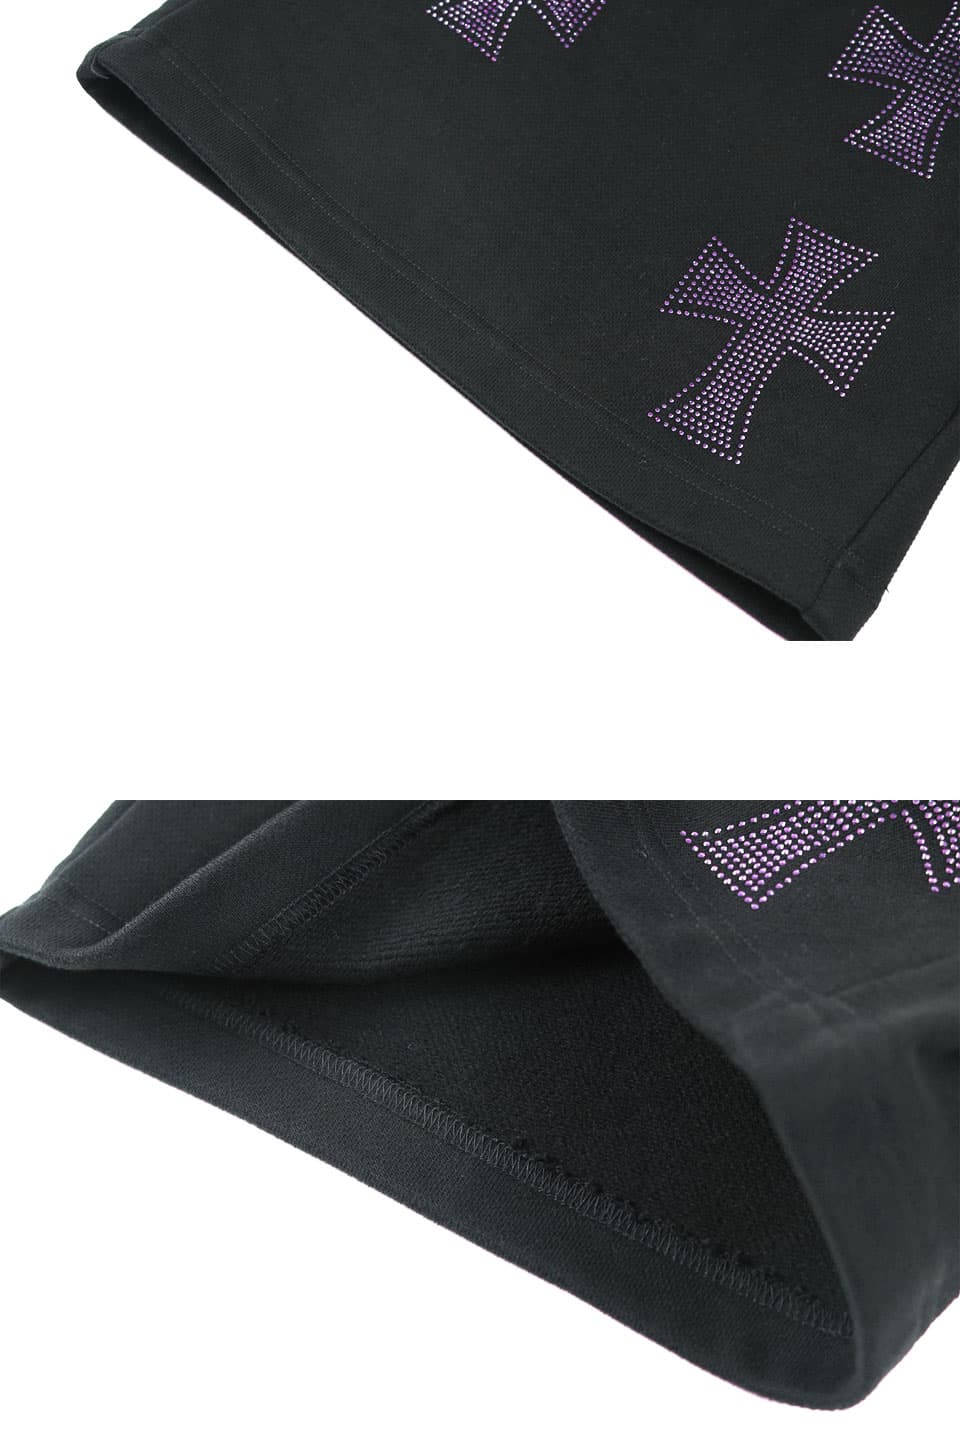 Purple Cross Rhinestone Shorts